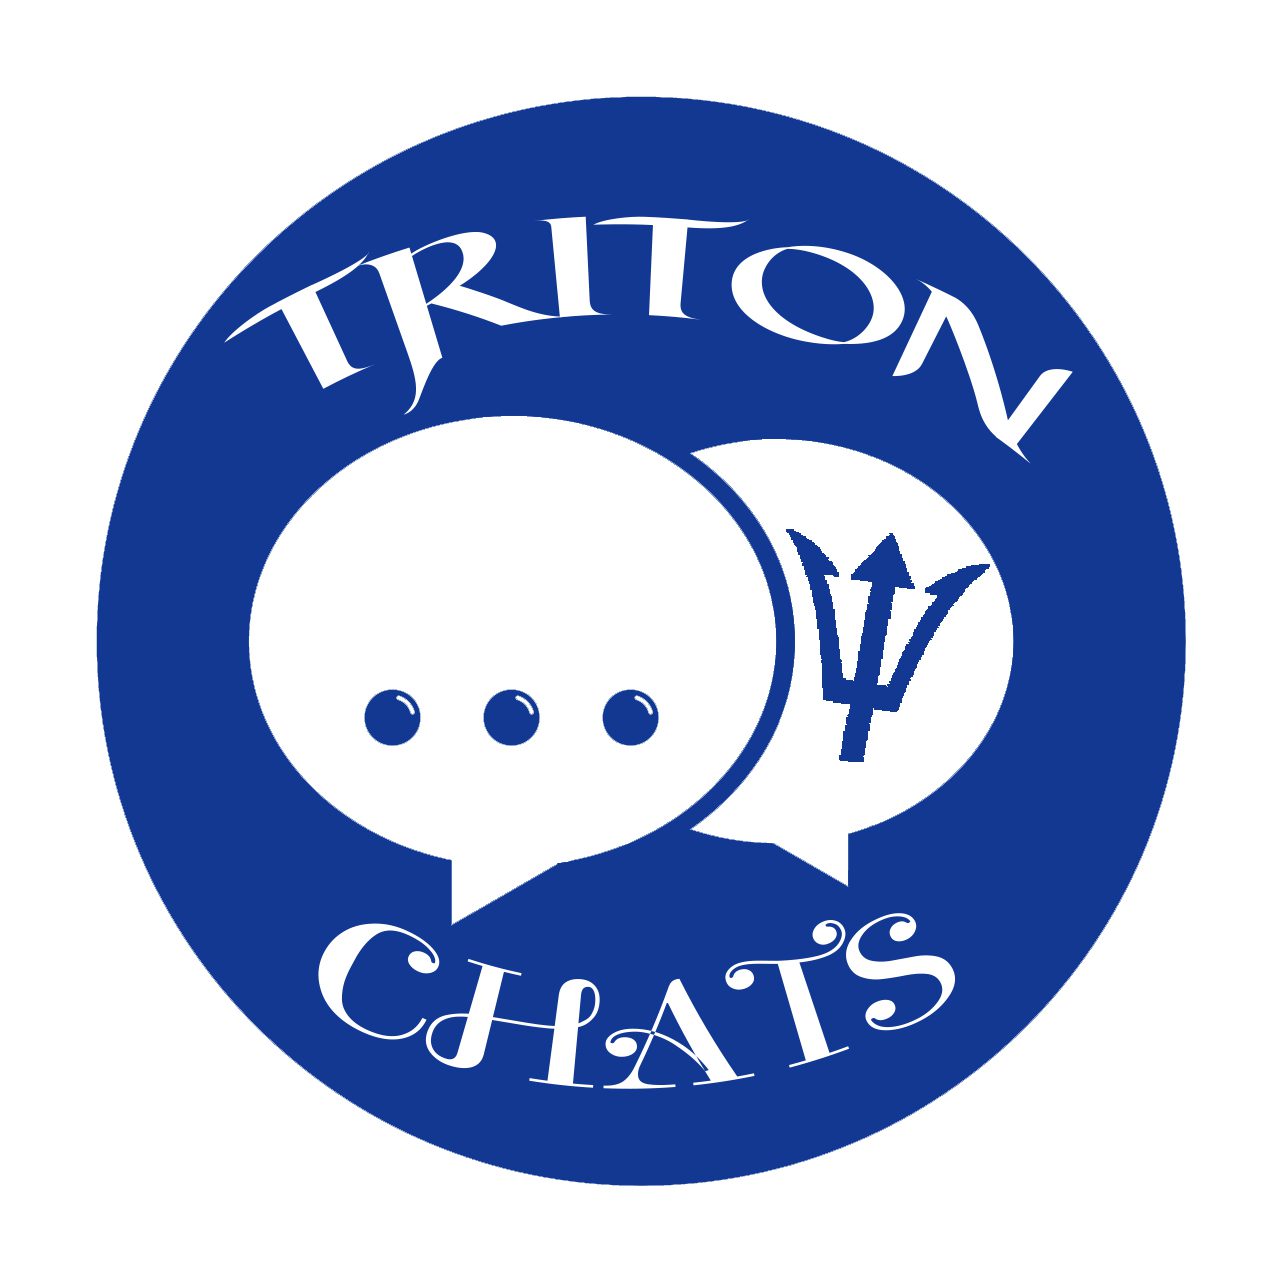 TritonChats-1280x1280.jpg